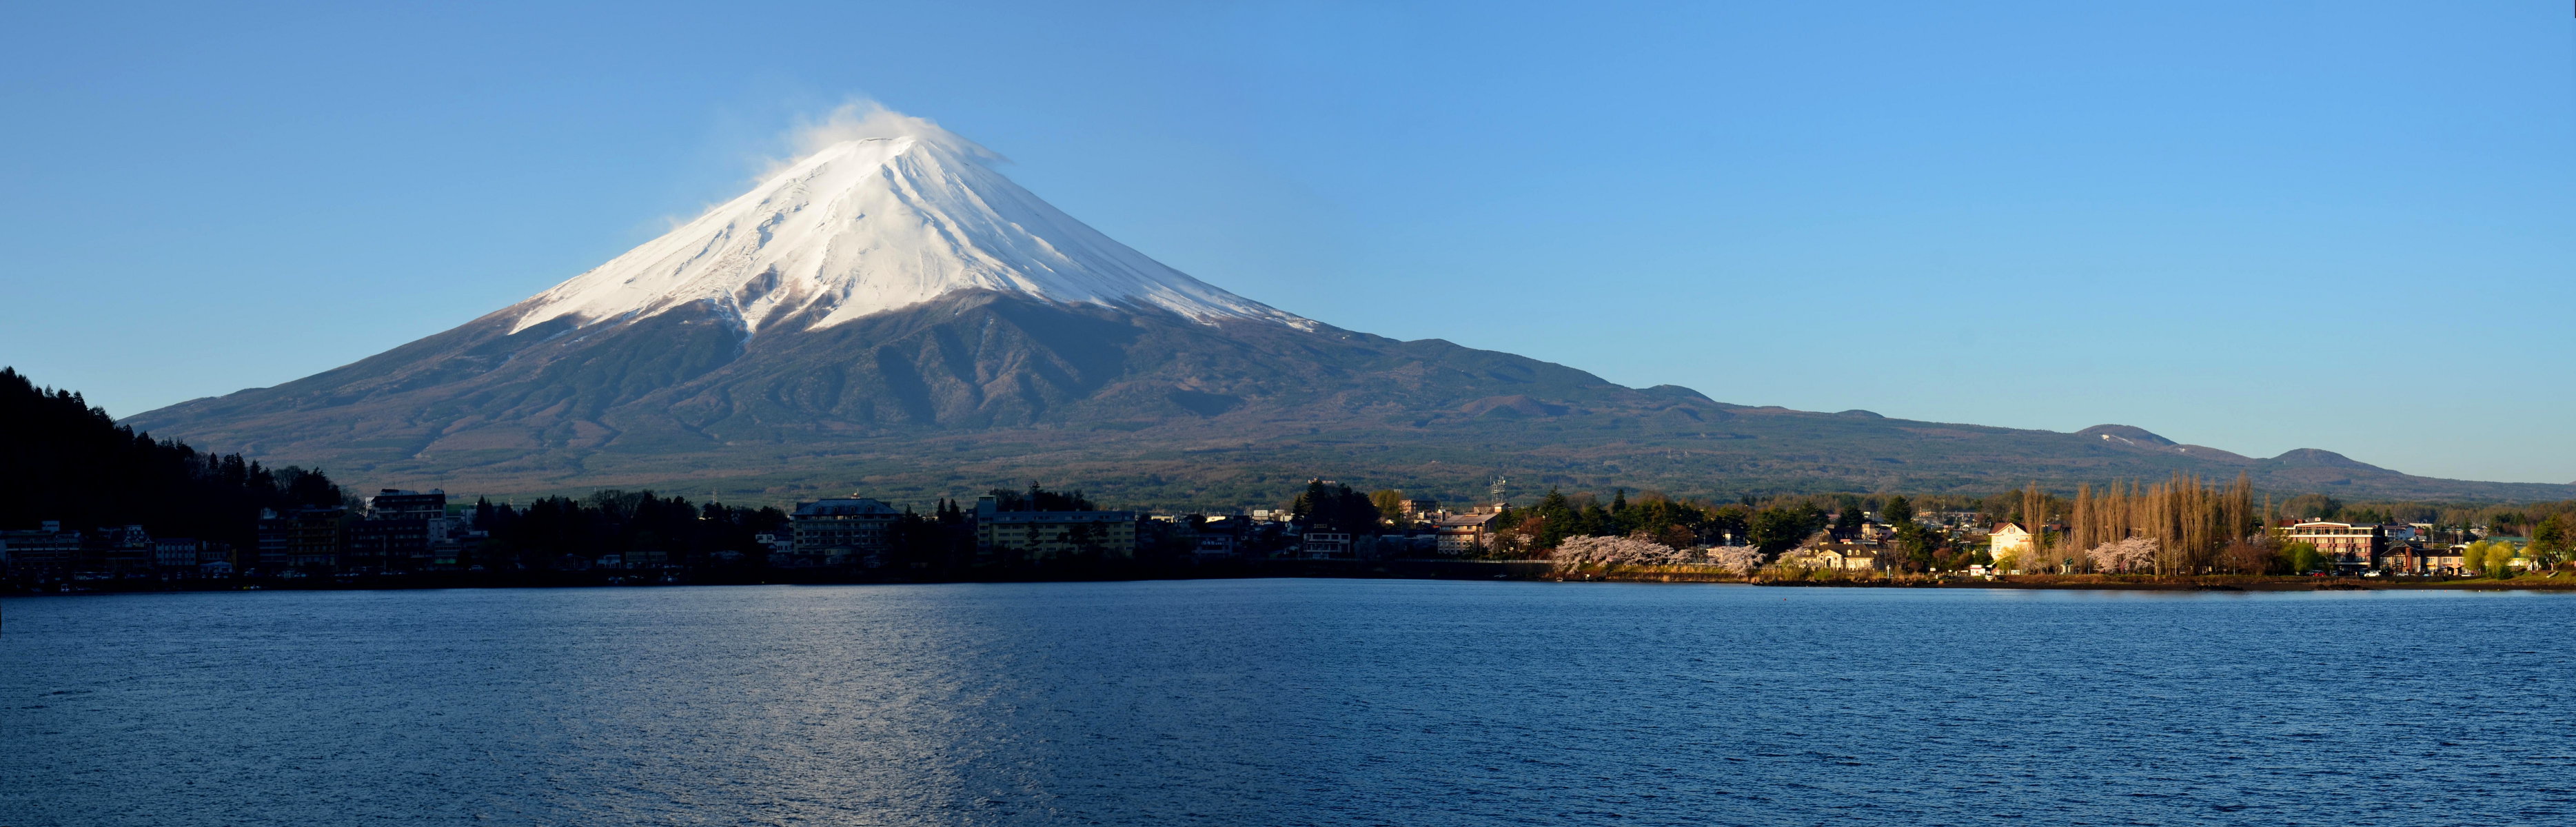 Mount Fuji - Japan.jpg